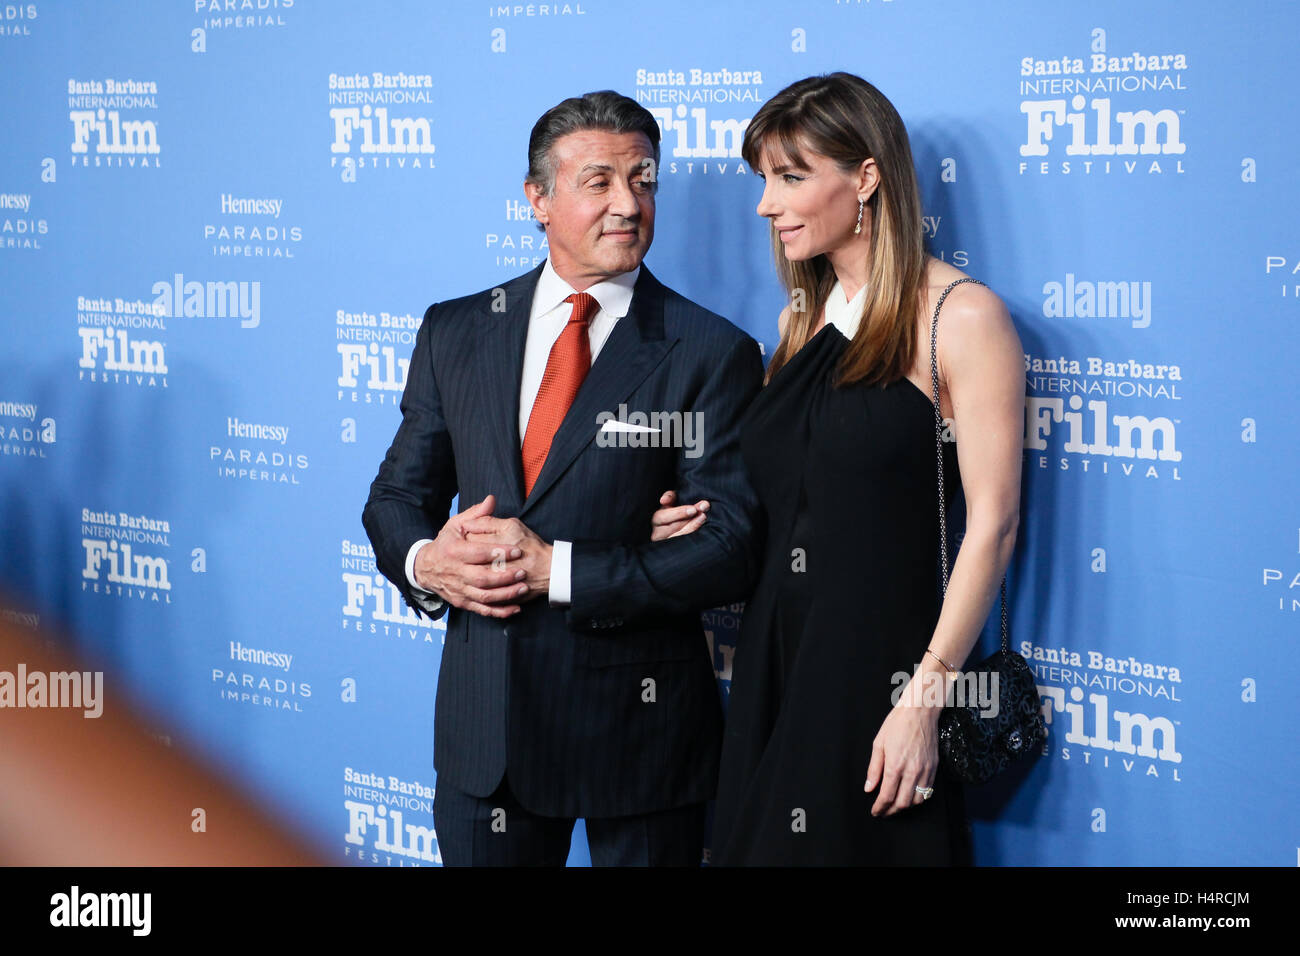 Actor Sylvester Stallone and Jennifer Flavin at The Santa Barbara International Film Festival on February 9th, 2016 in Santa Barbara, California. Stock Photo